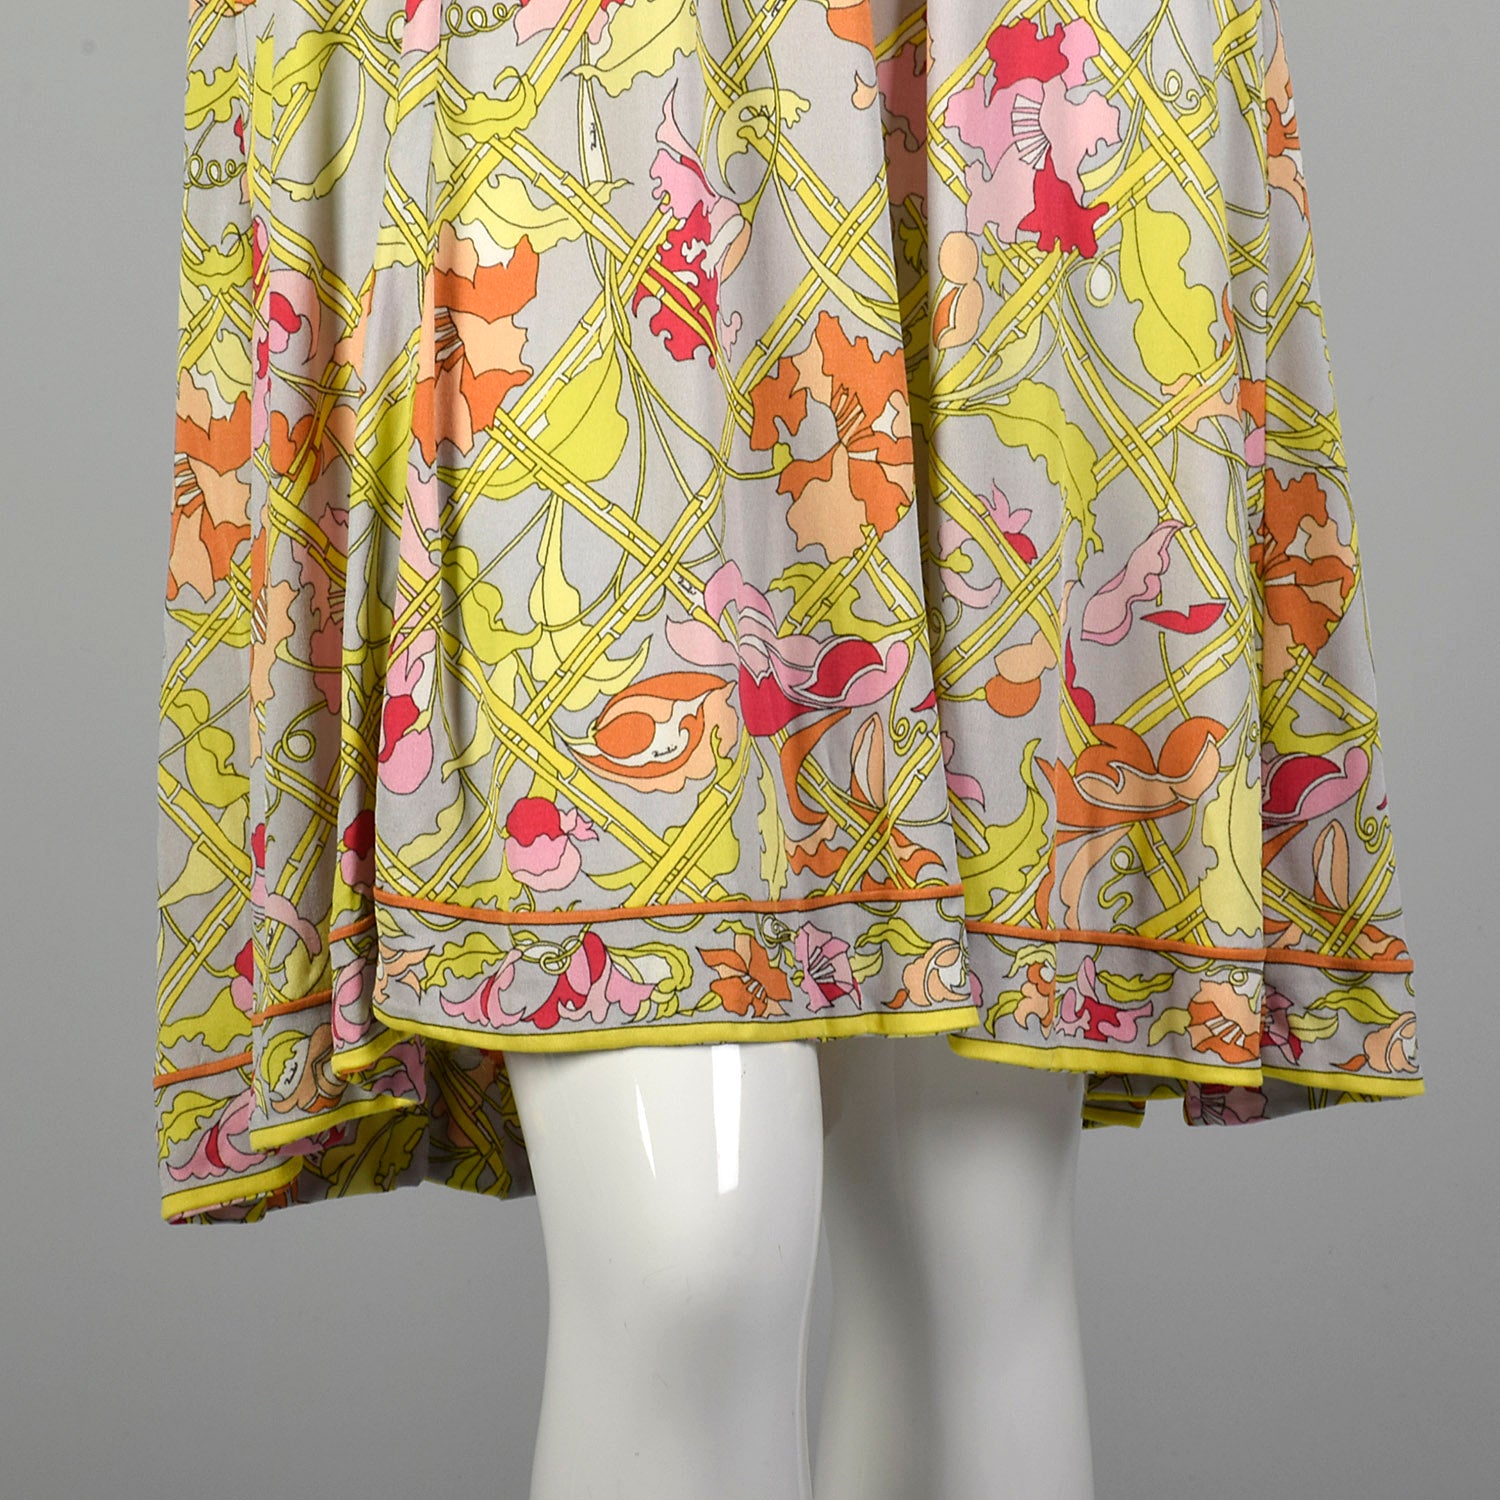 XXS 1960s Emilio Pucci Dress Long Sleeve Signature Print Silk Rayon Jersey